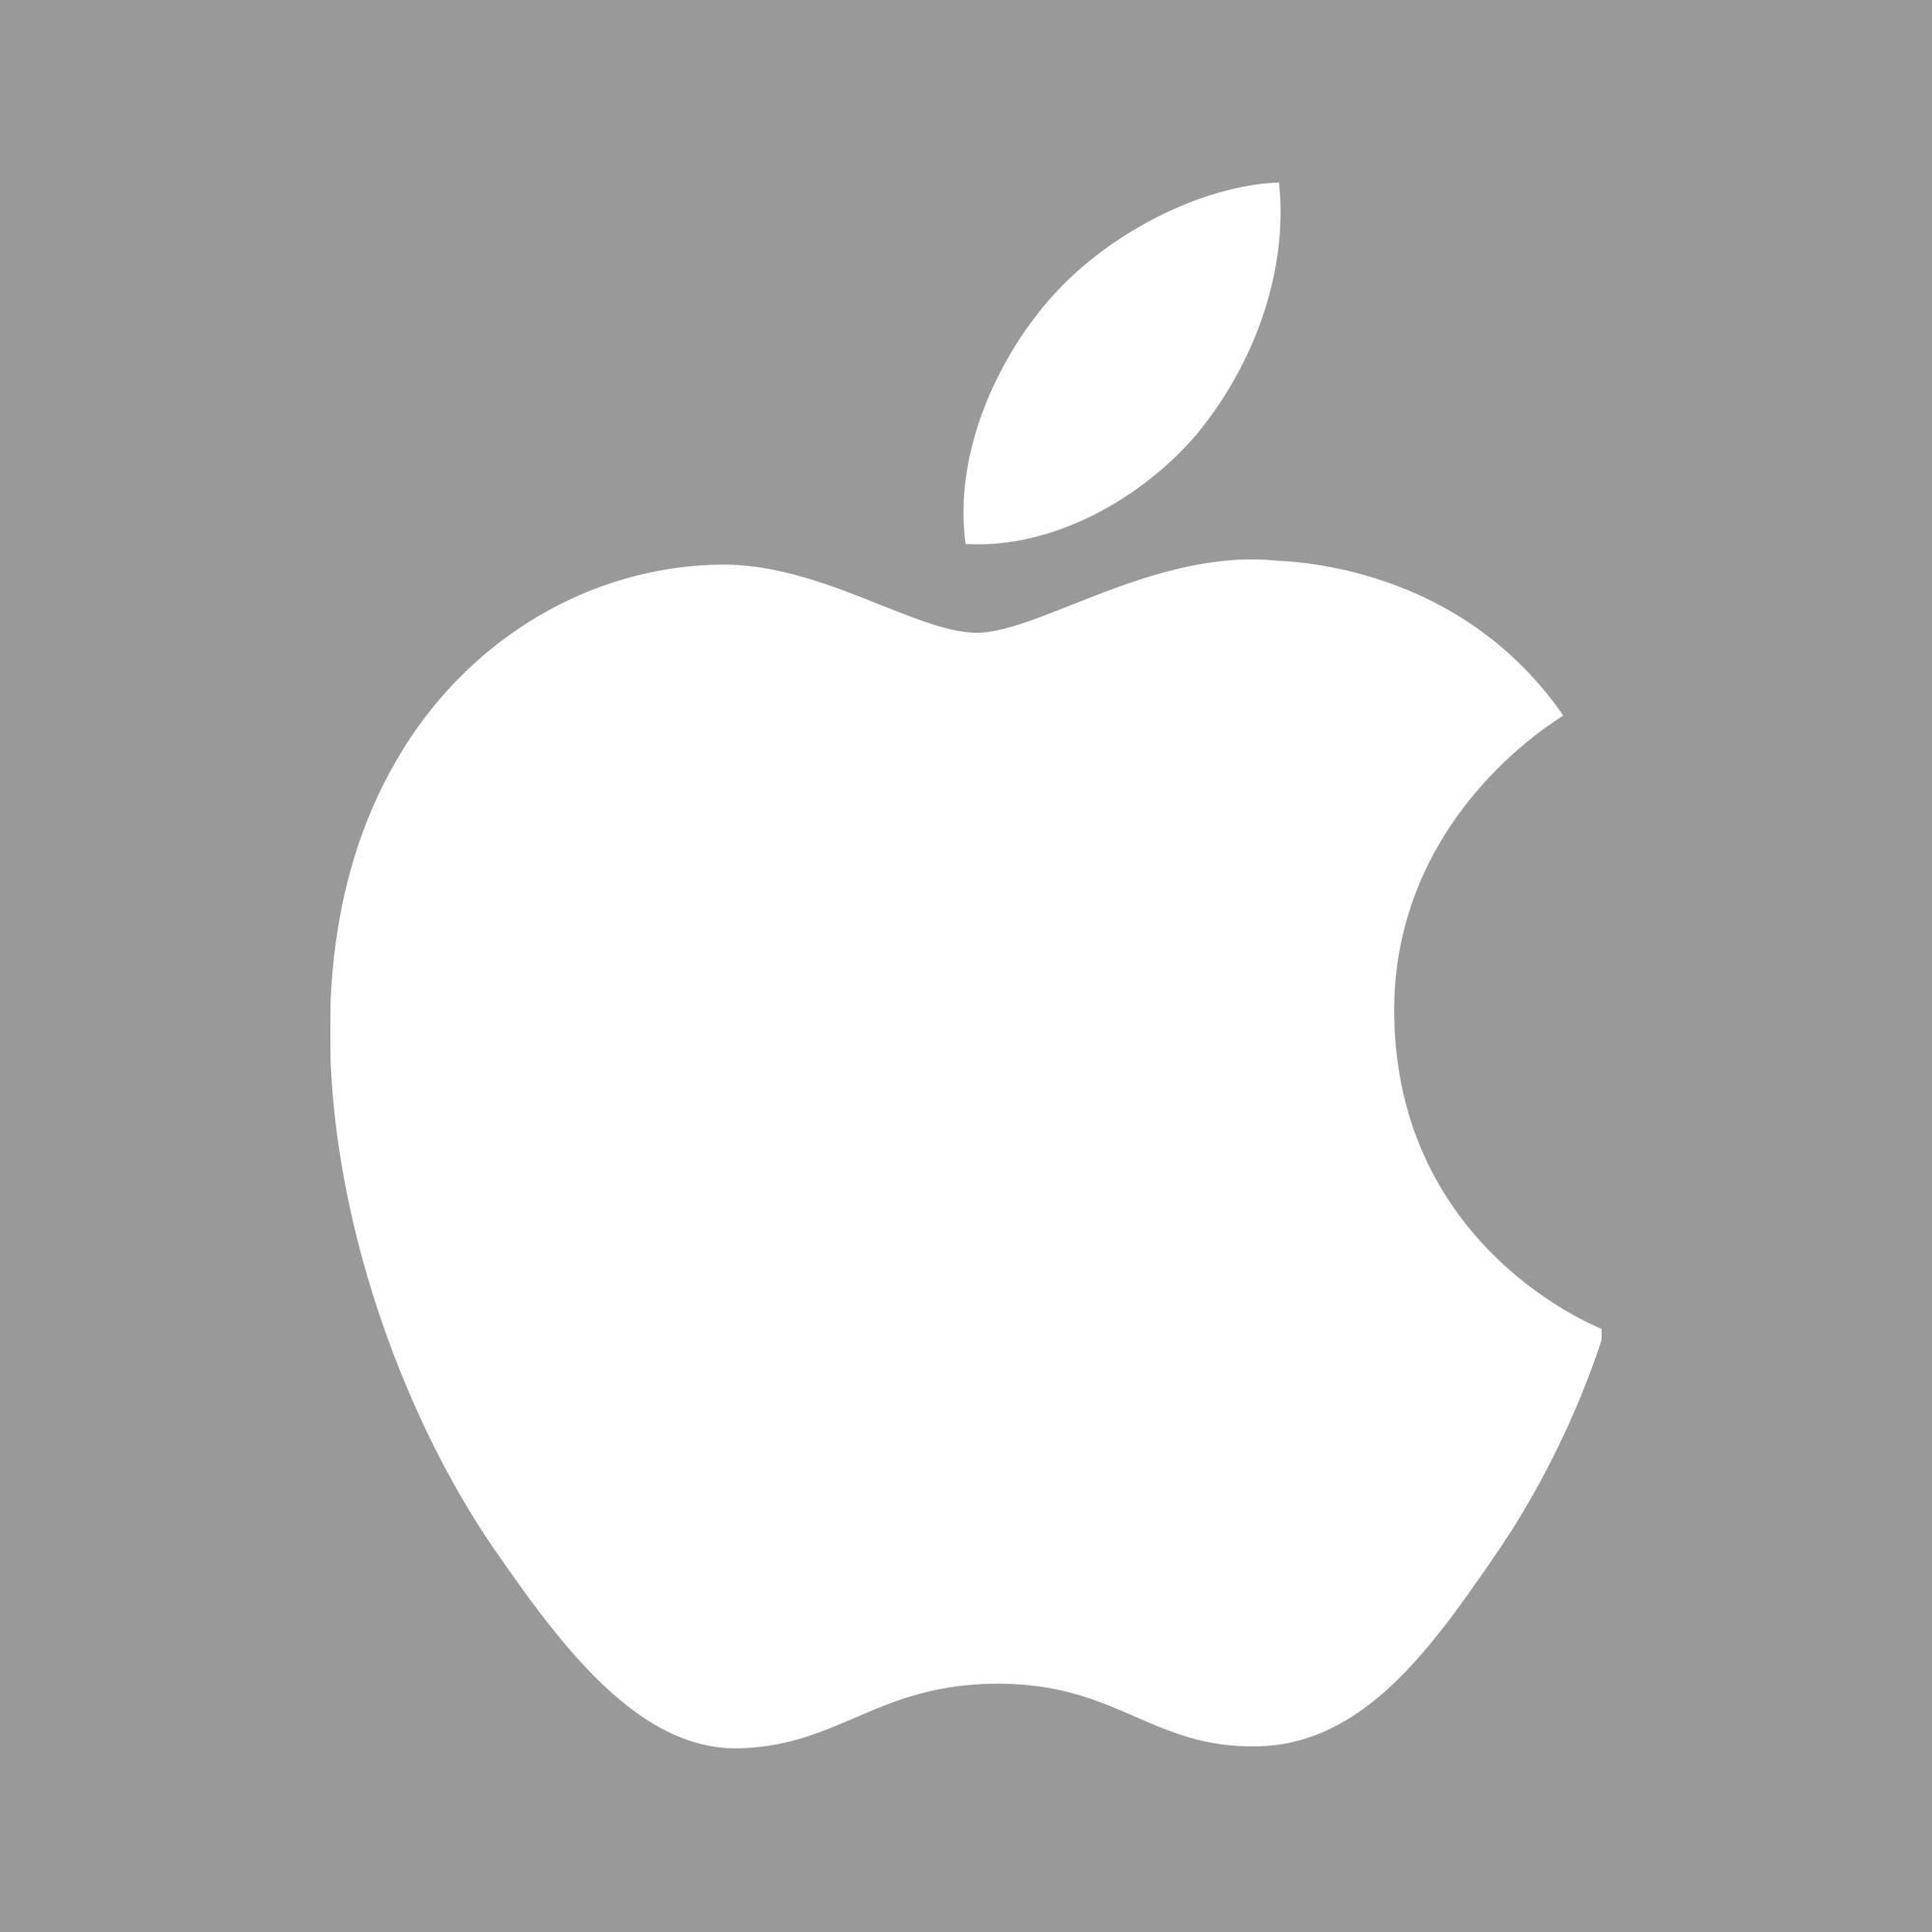 2015 Apple Logo - Apple Logo – 2 Versions | Digital Art & Design Blog